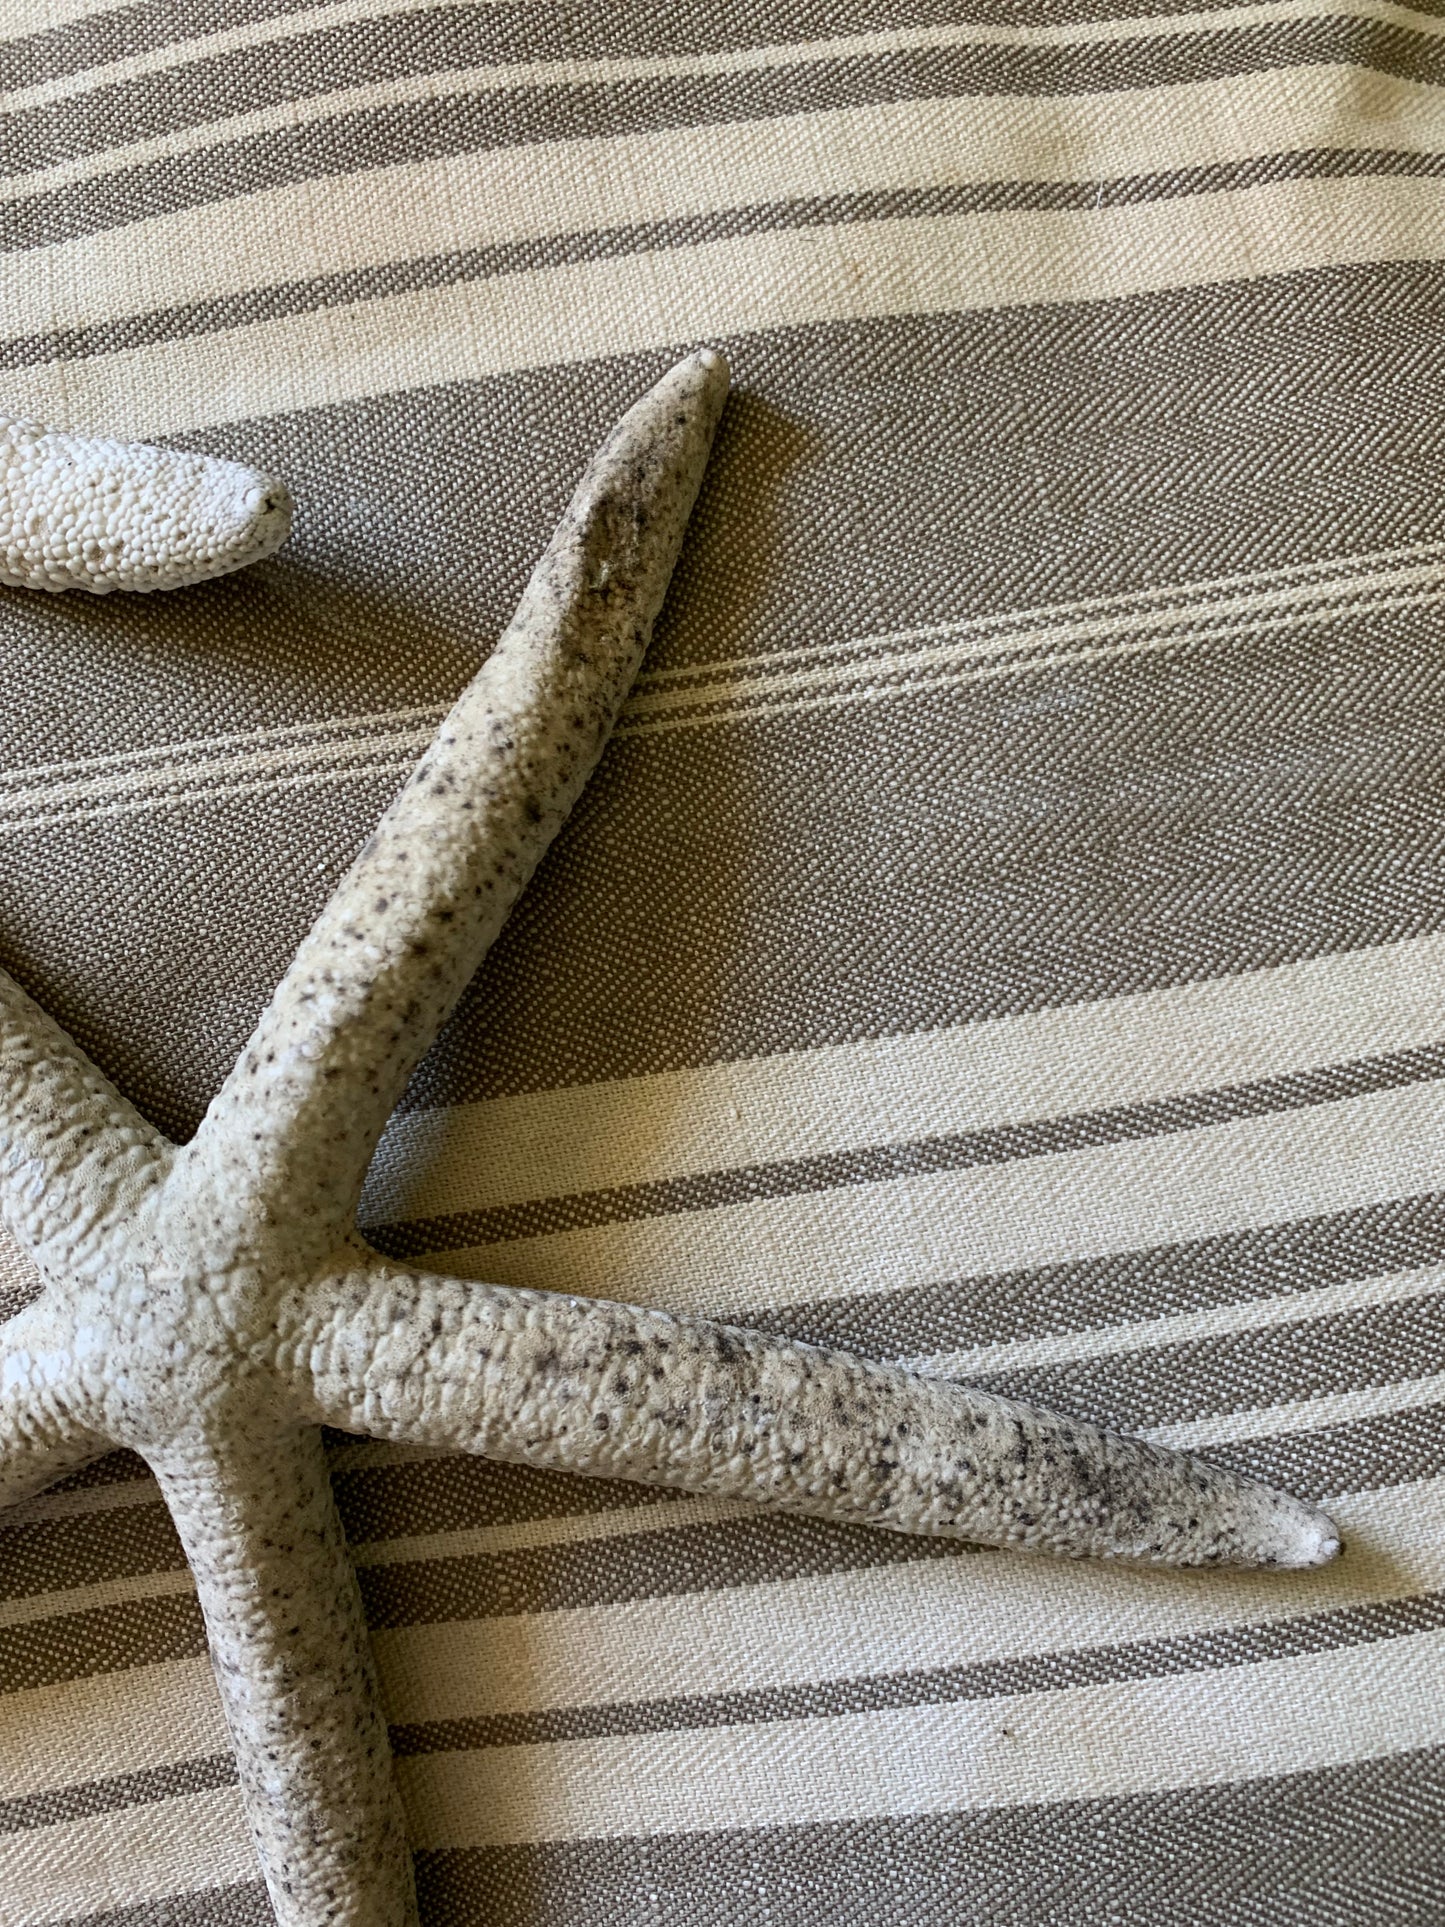 Vintage real starfish